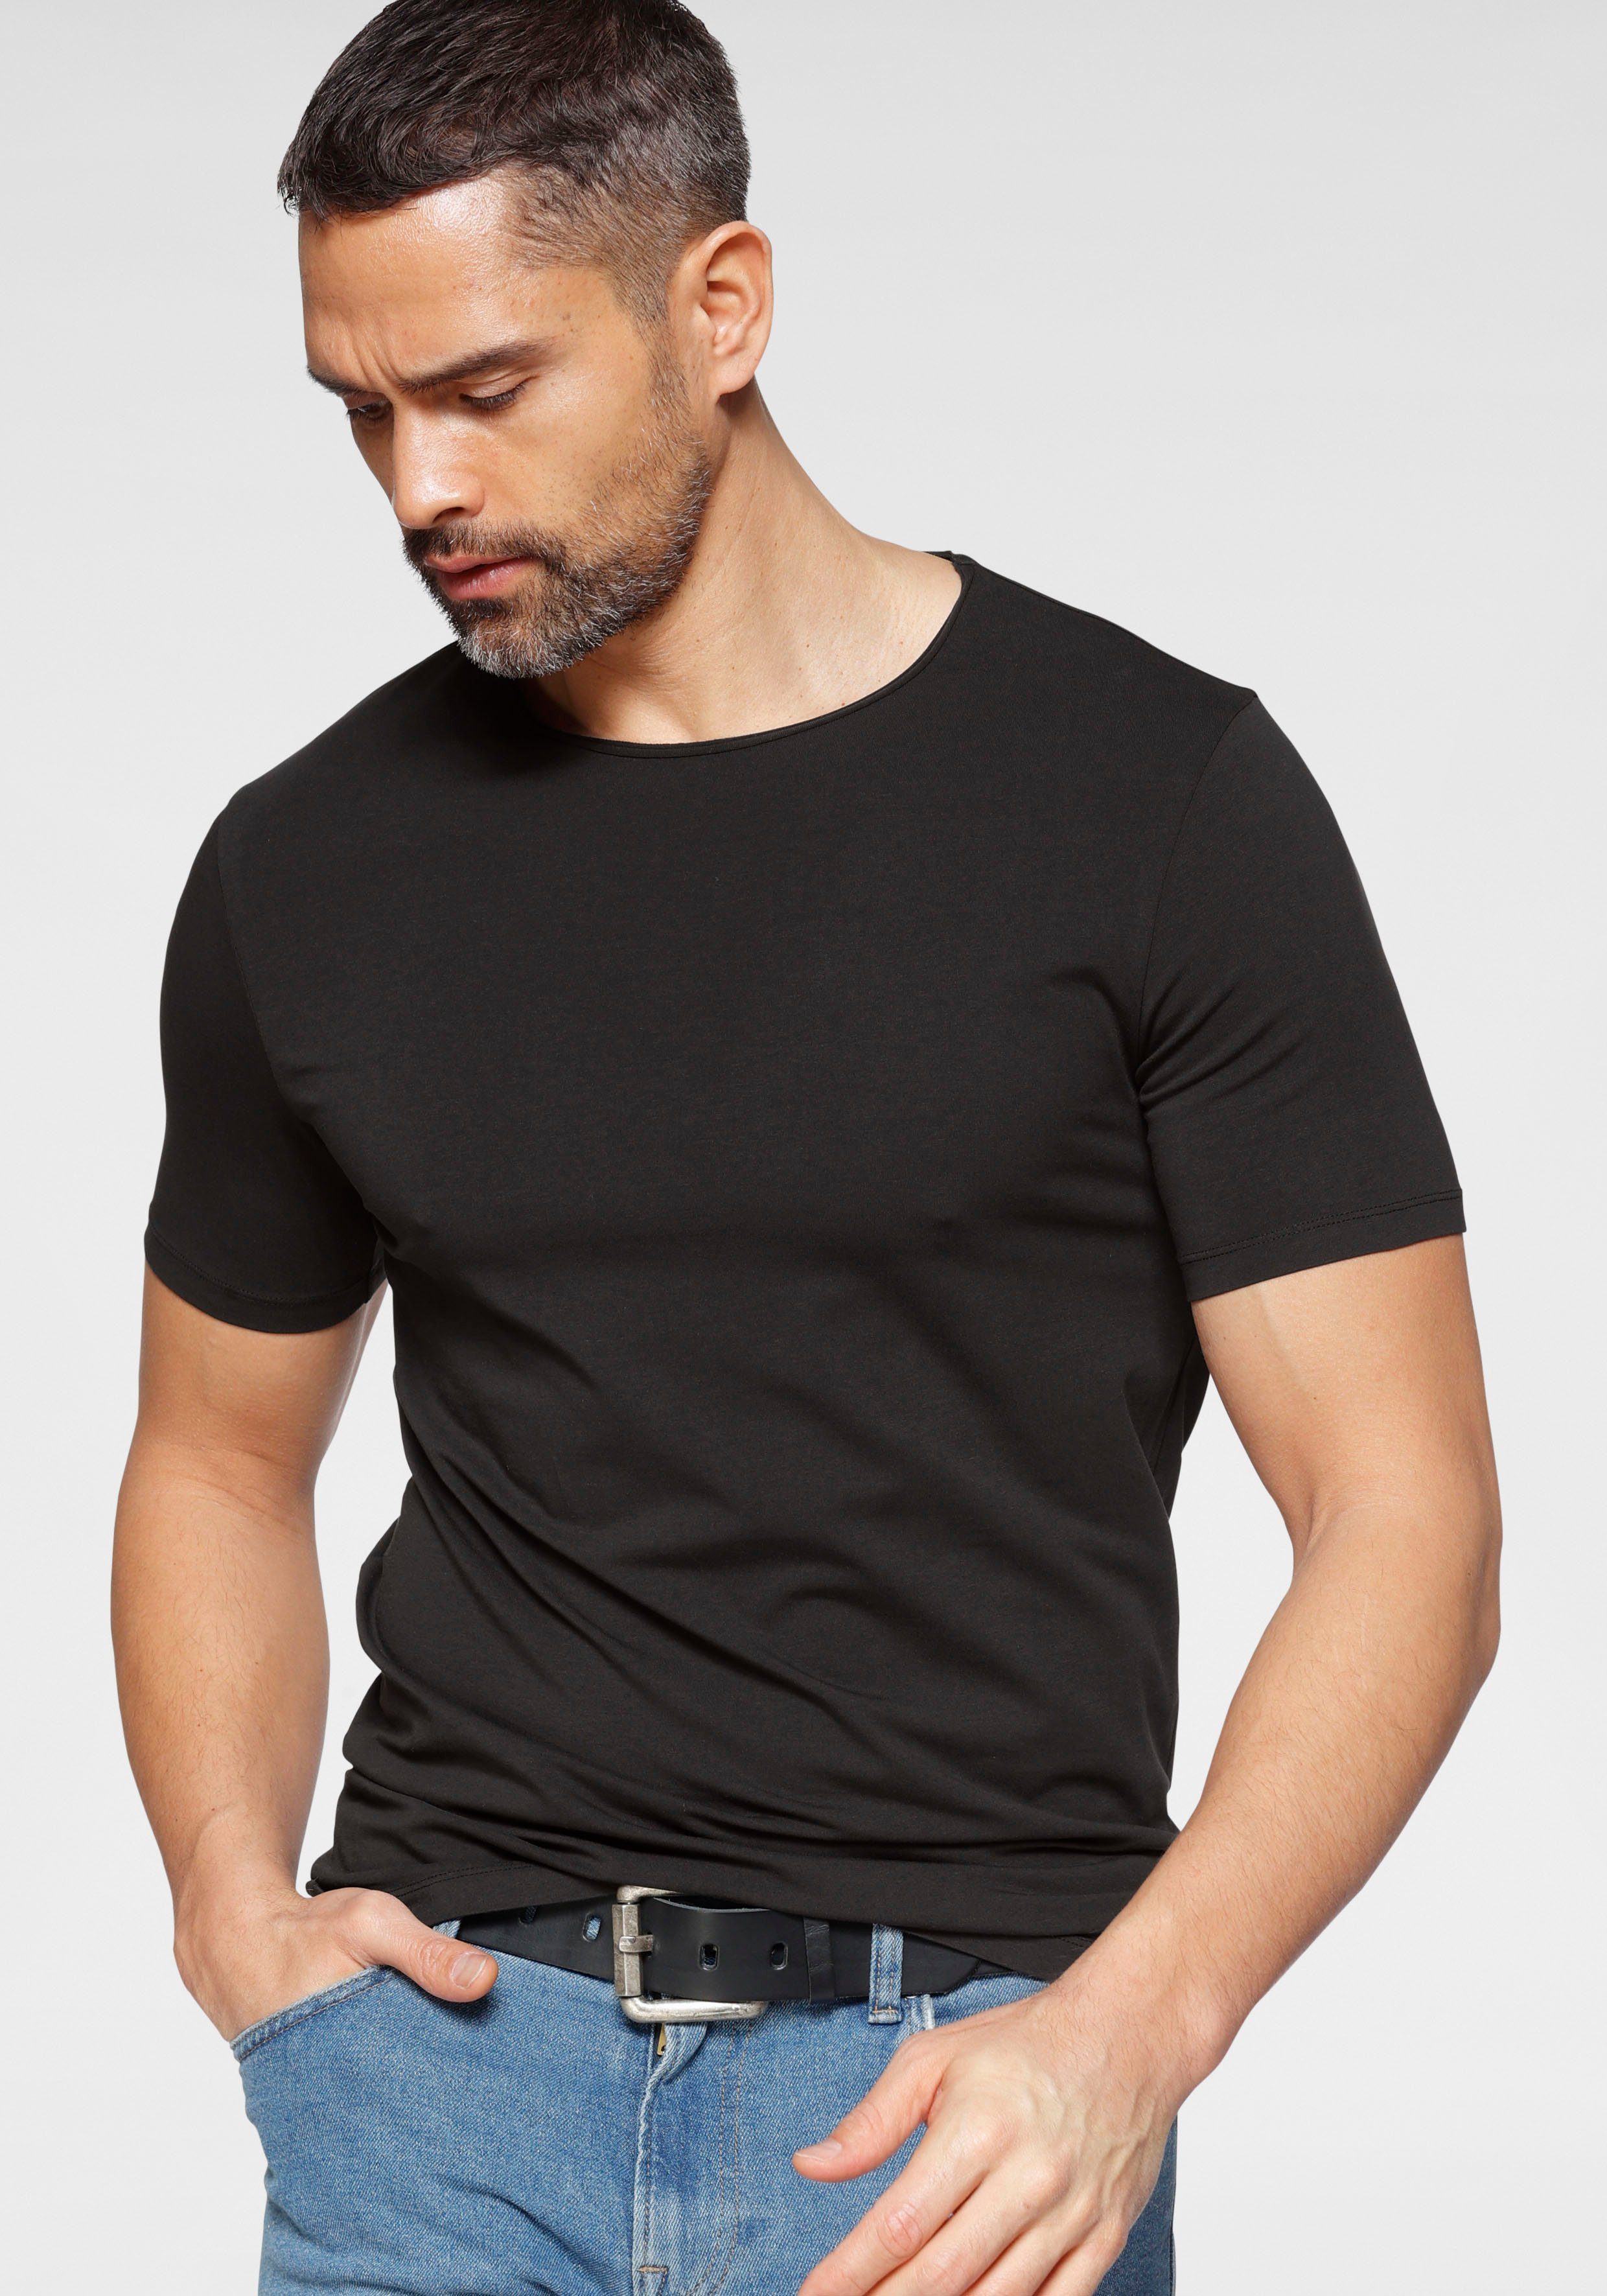 [Sehr beliebtes Standardprodukt] OLYMP T-Shirt Level Five body schwarz feinem Jersey fit aus